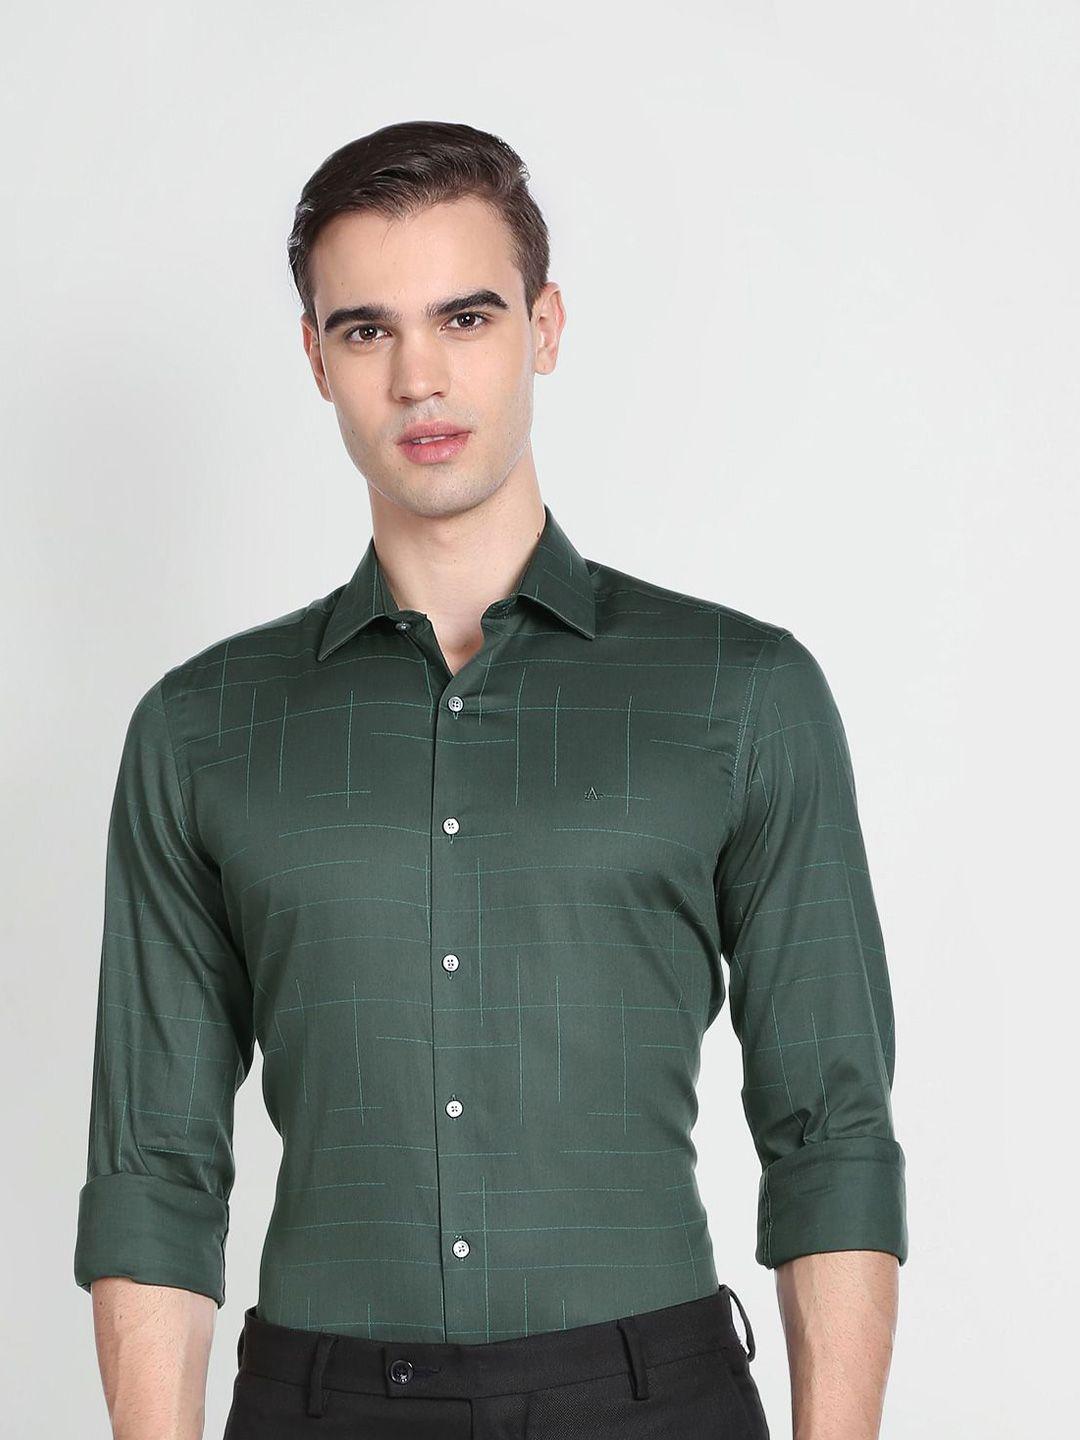 arrow geometric printed twill cotton formal shirt